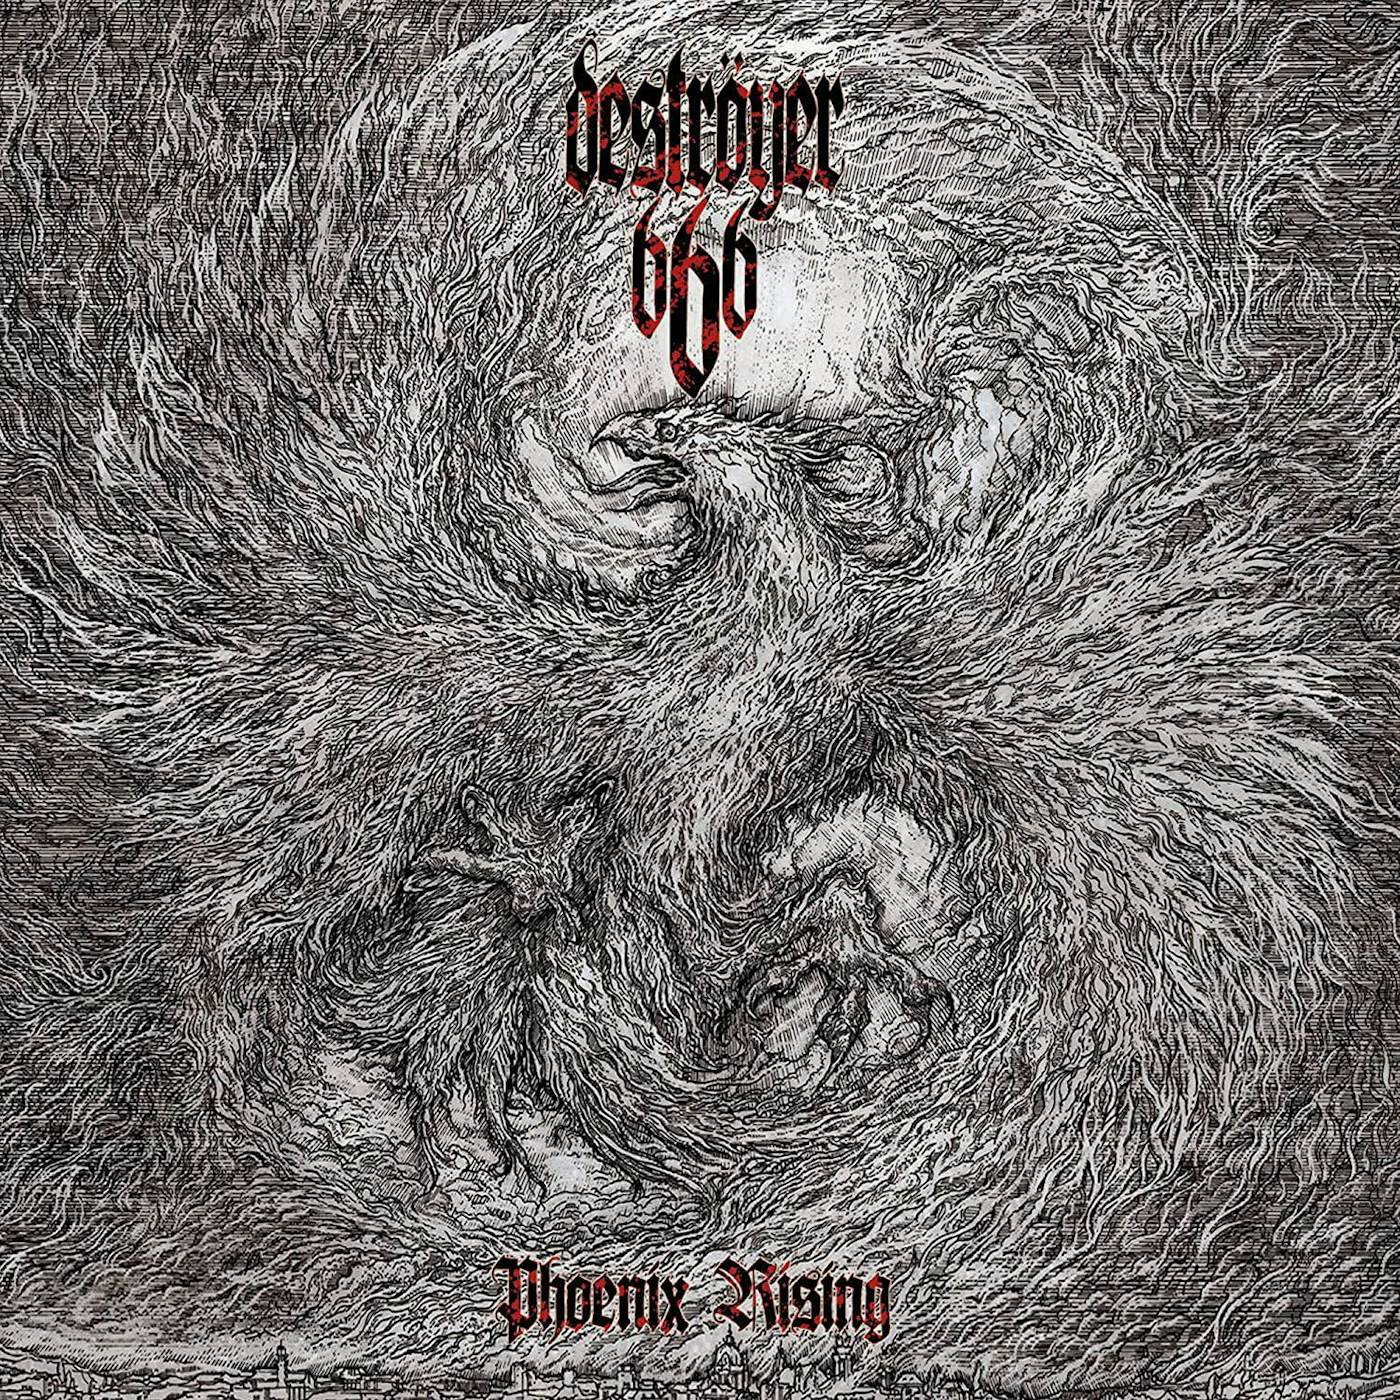 Deströyer 666 Phoenix Rising (White & Black Marbled Vinyl Record)